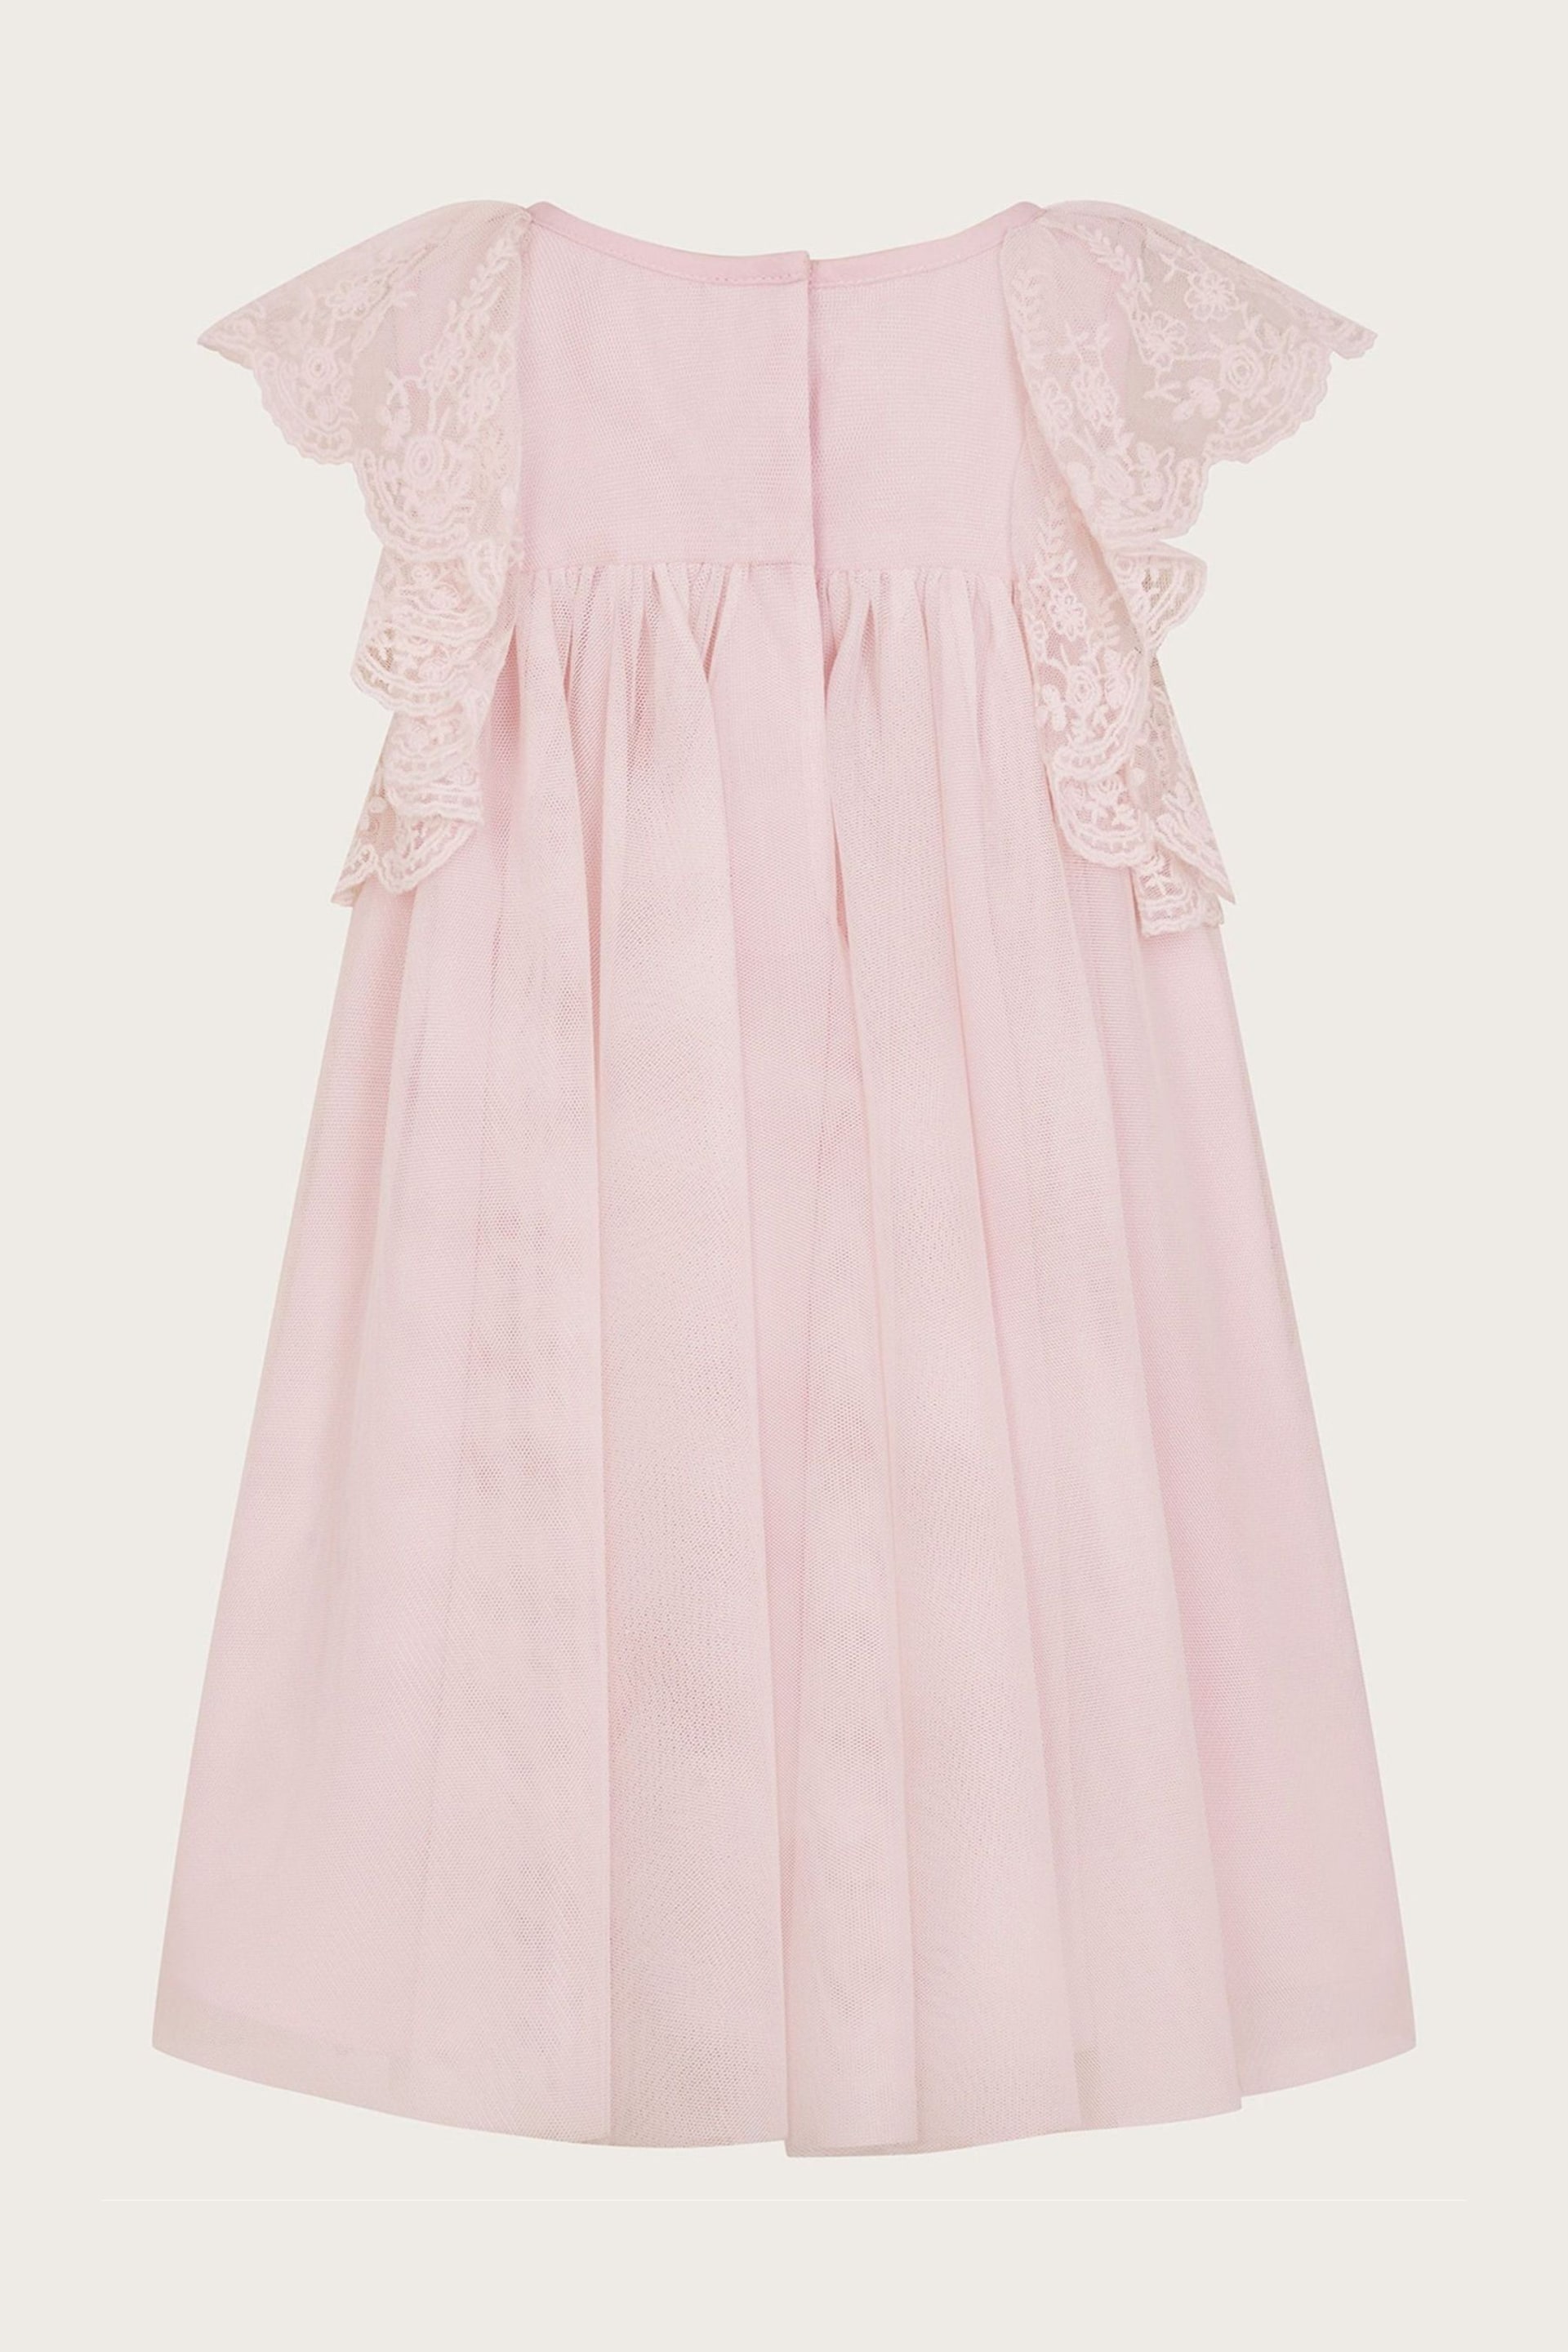 Monsoon Pink Baby Charlotte Frill Dress - Image 3 of 4